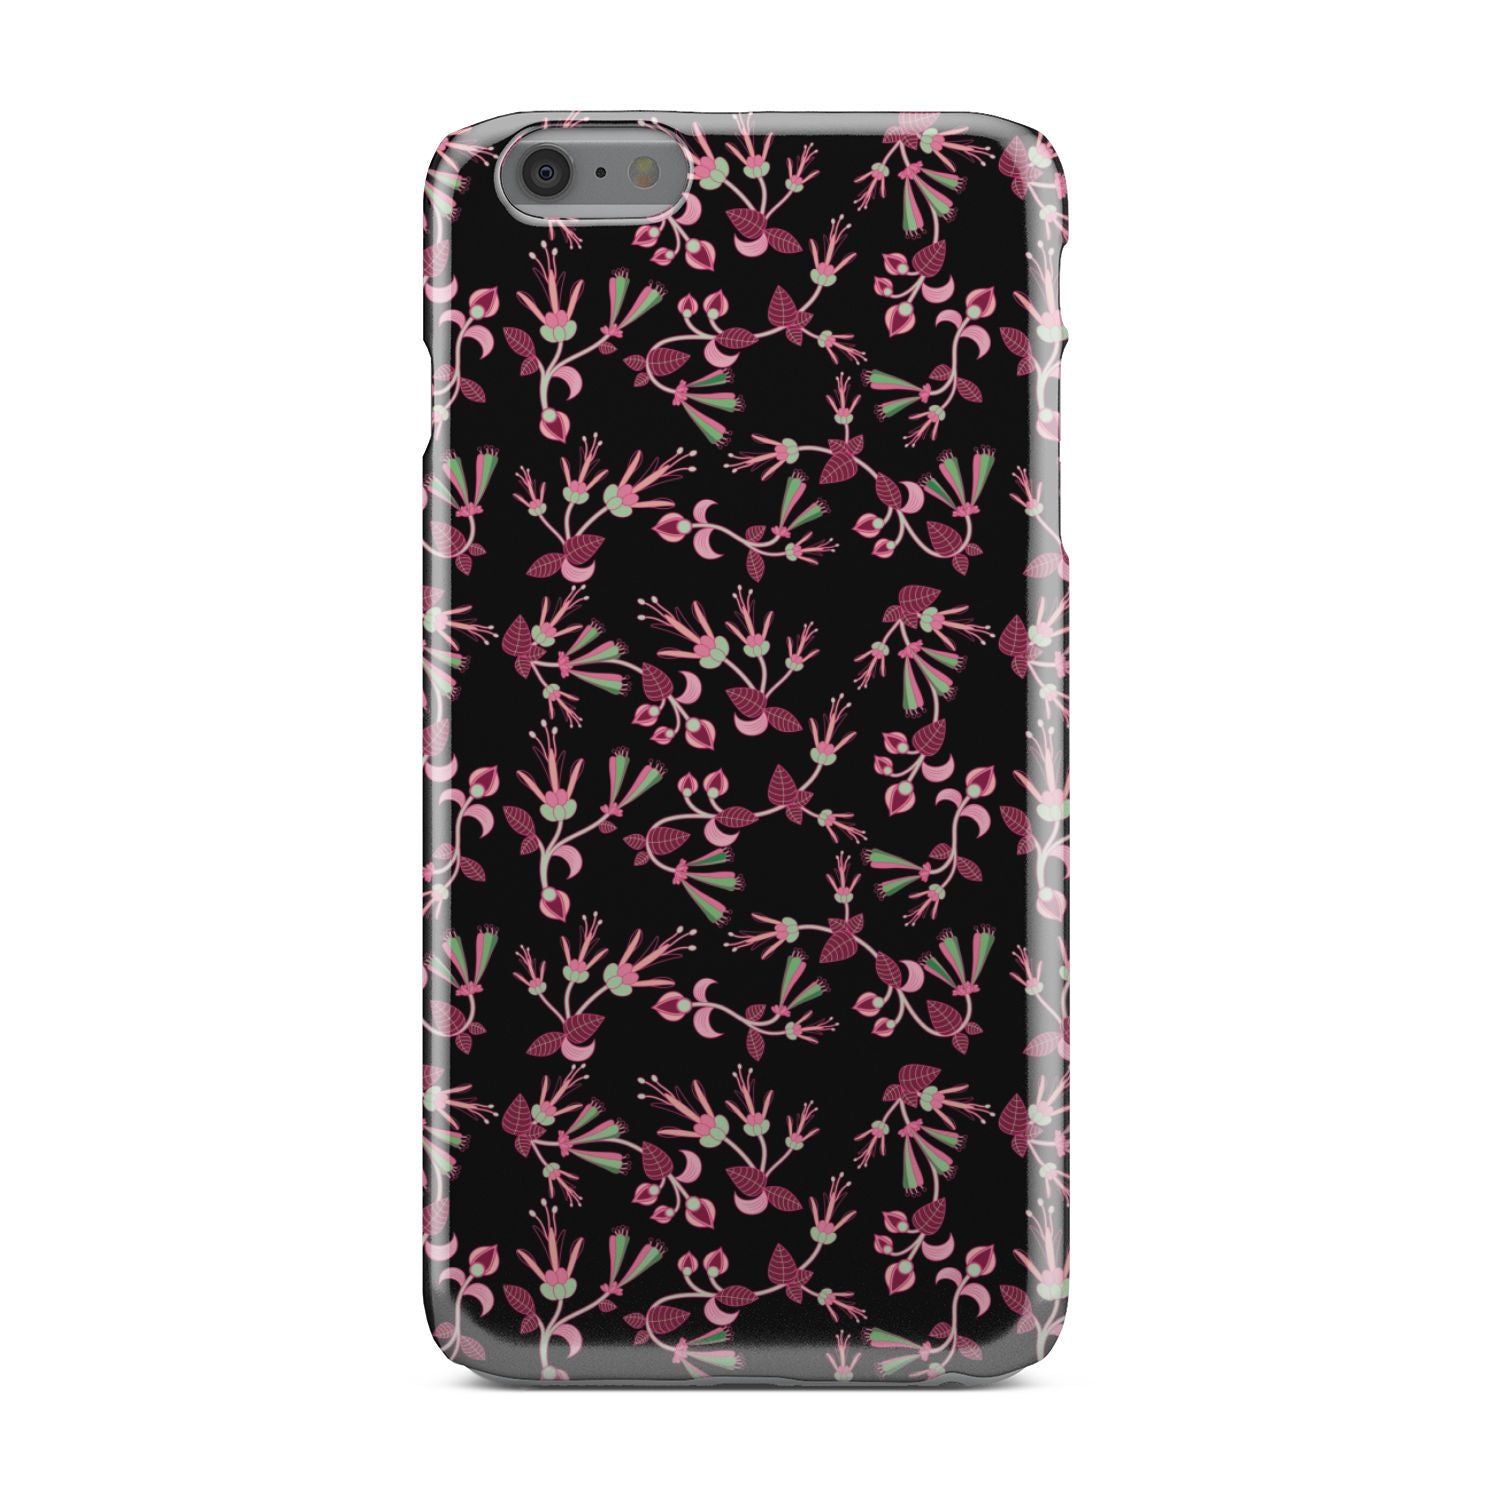 Floral Green Black Phone Case Phone Case wc-fulfillment iPhone 6s Plus 